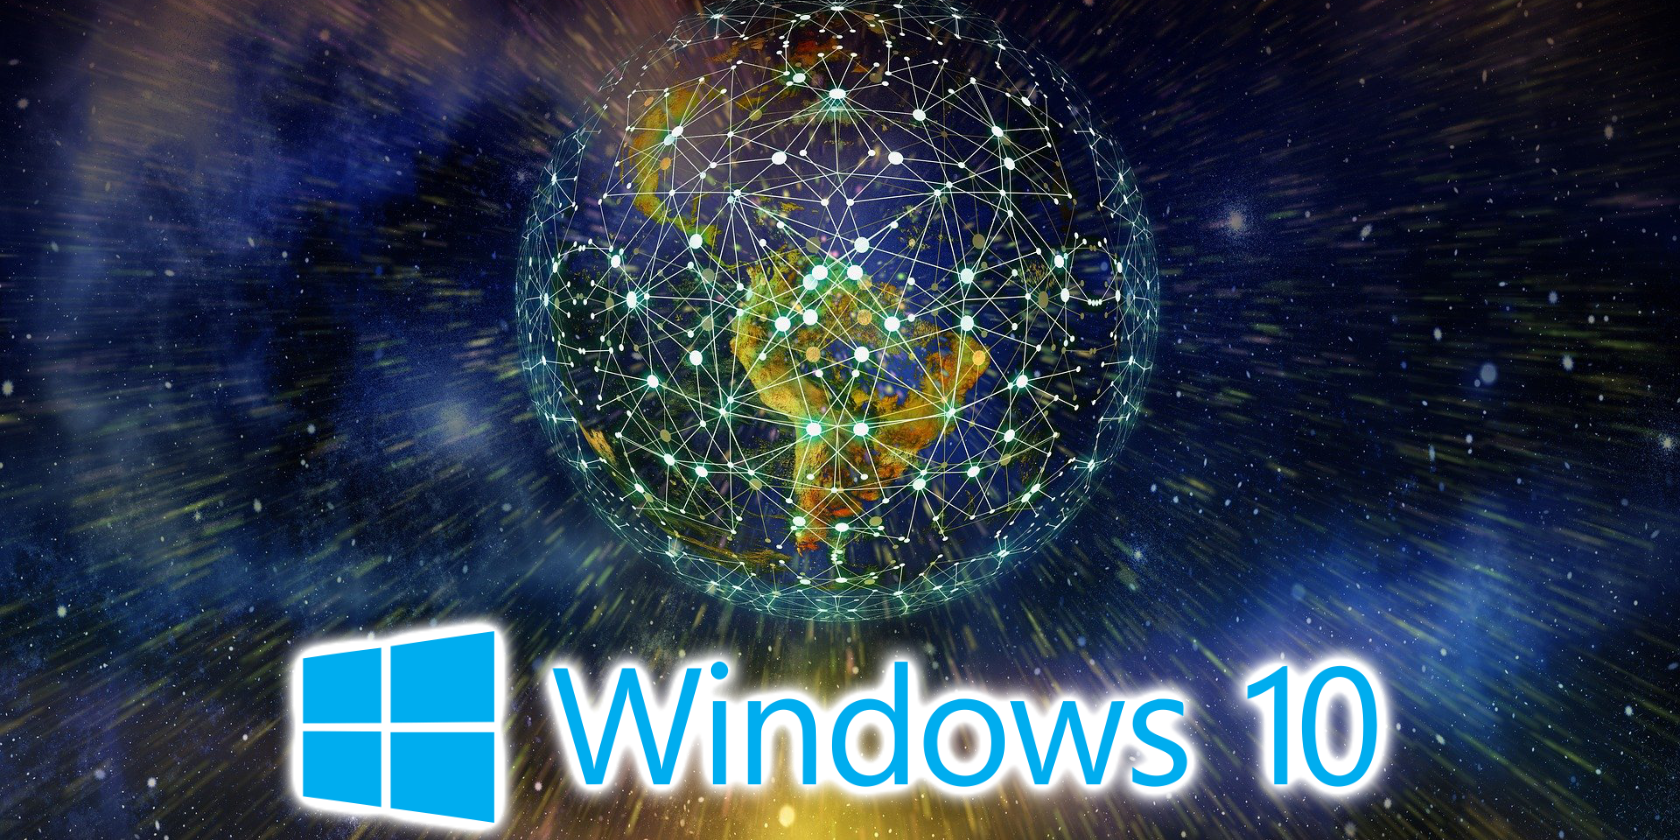 Windows 10 global use